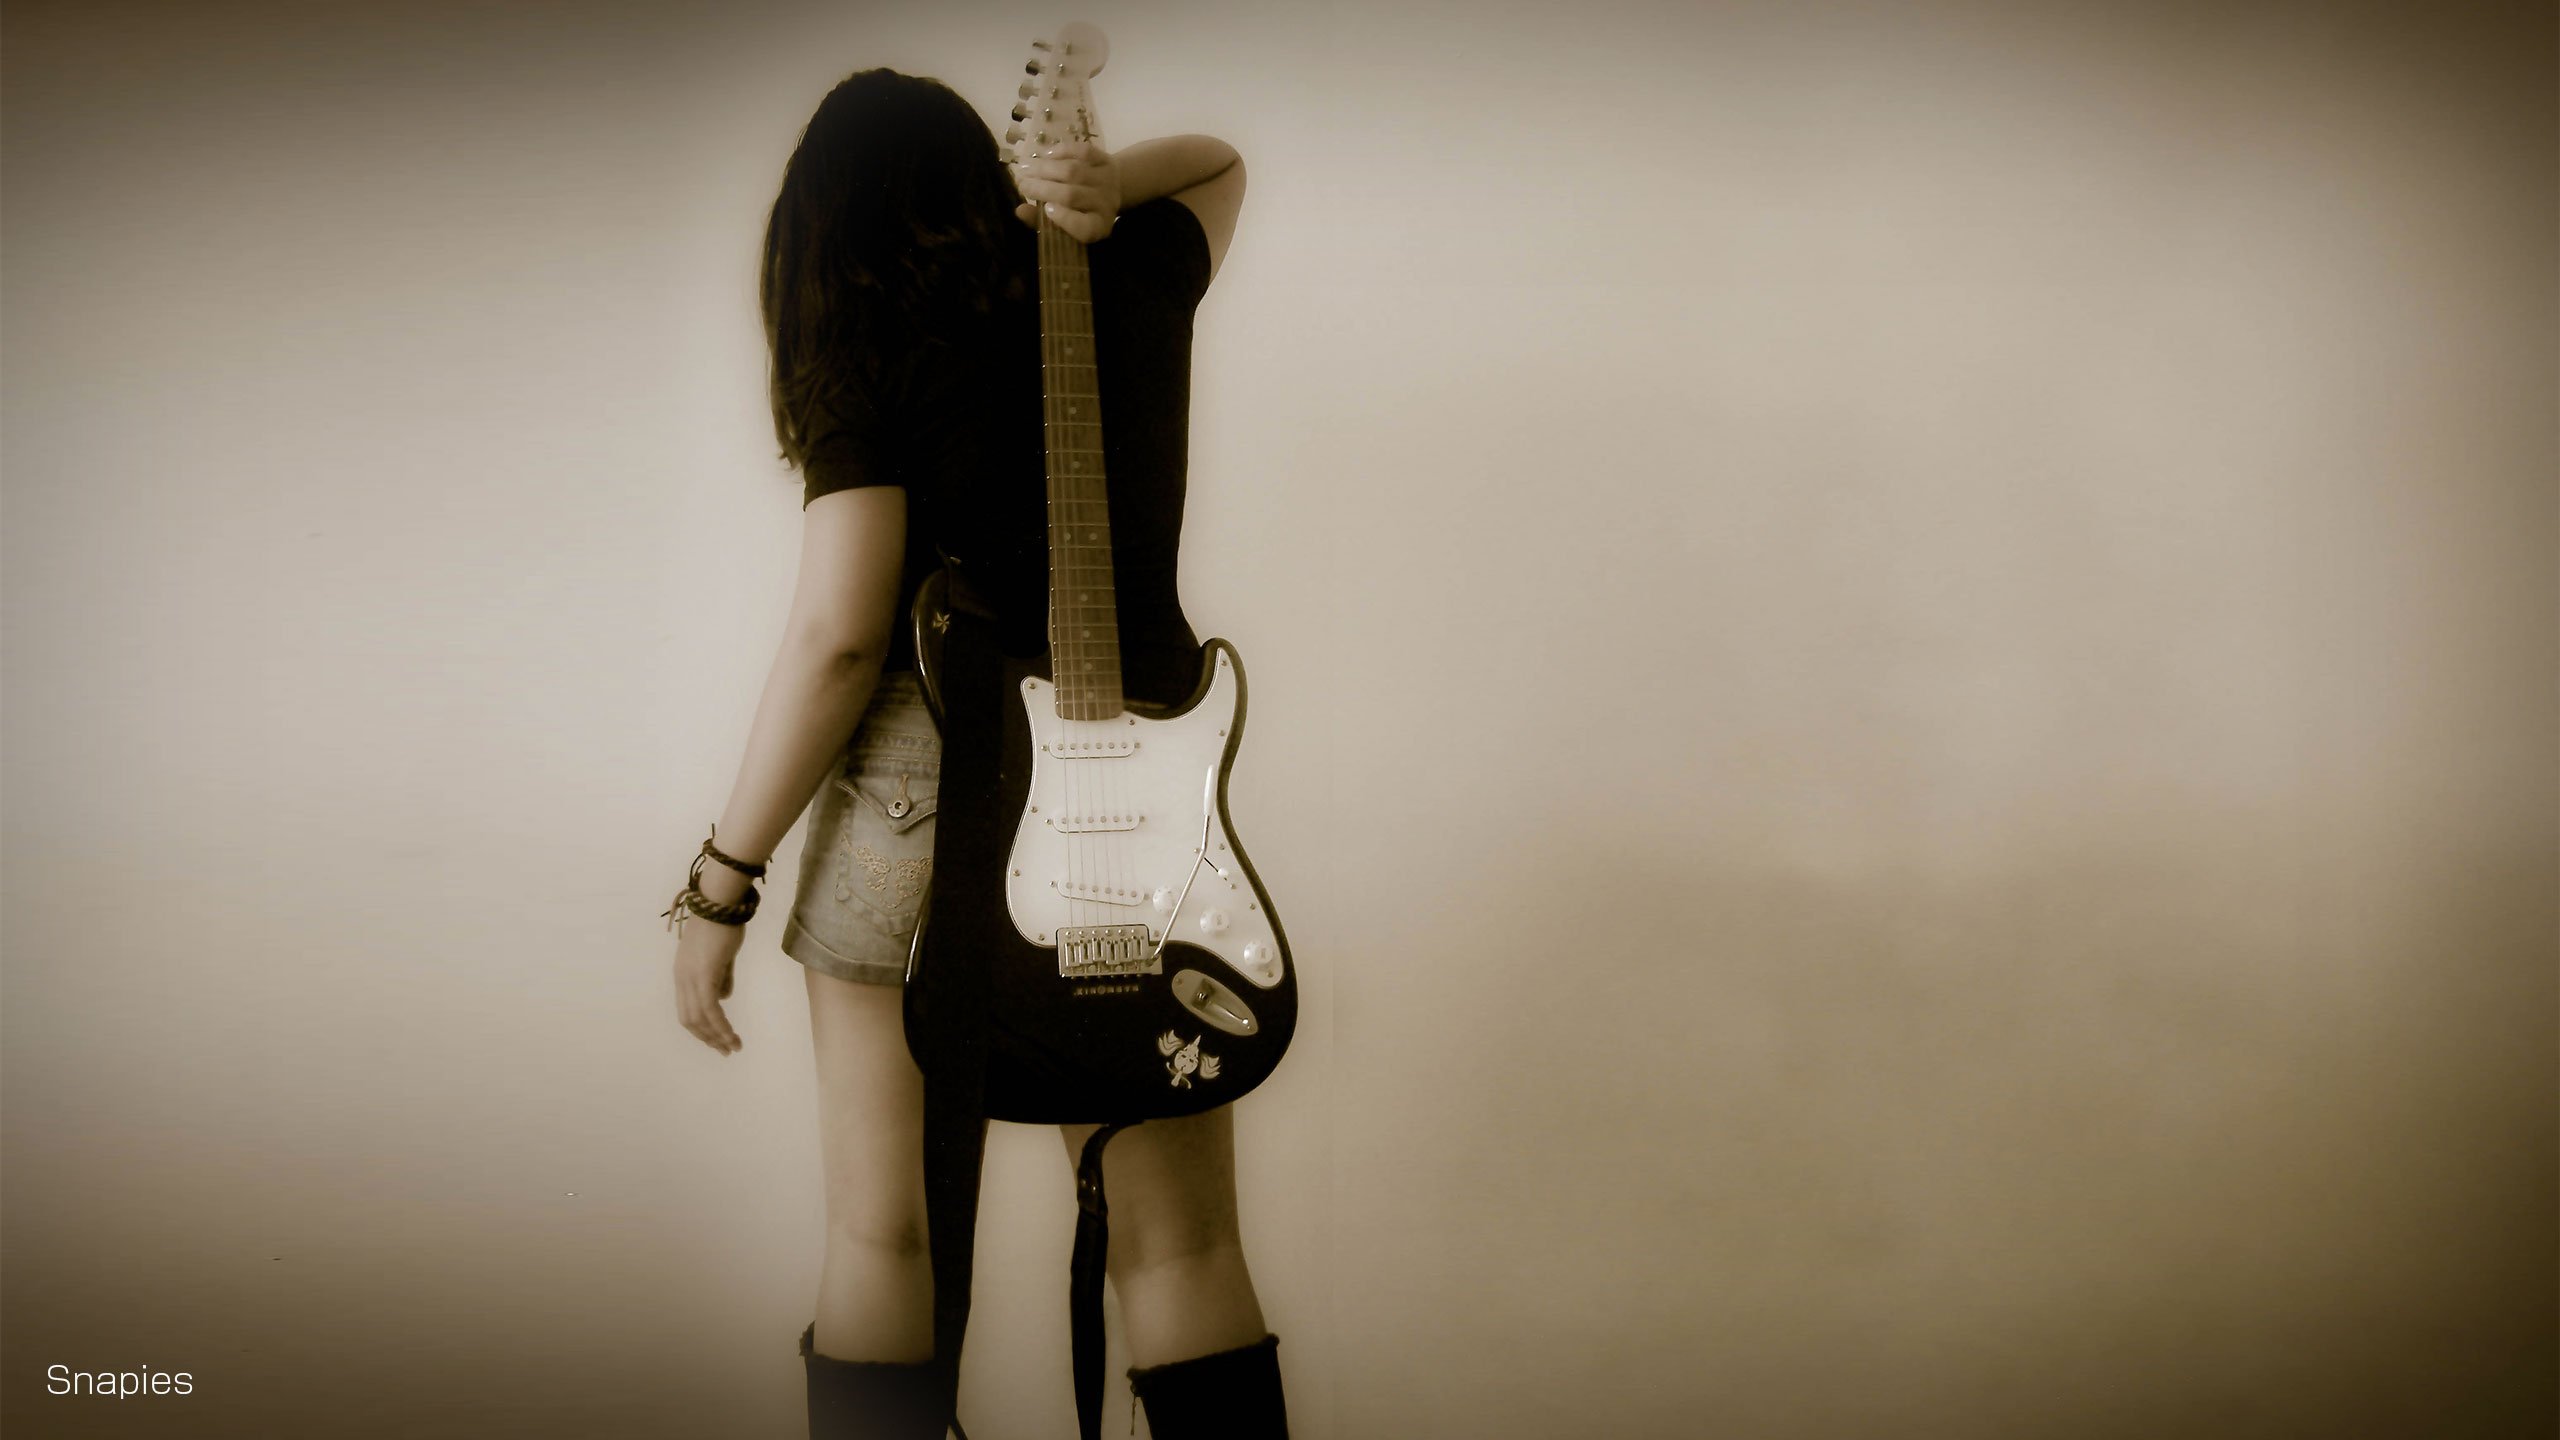 Rag Music 楽曲リクエスト募集中 カッコいいギター女子 人気の女性ギタリスト ギター女子 T Co Fk4aqofbyb T Co Dfhfakbk2z Twitter